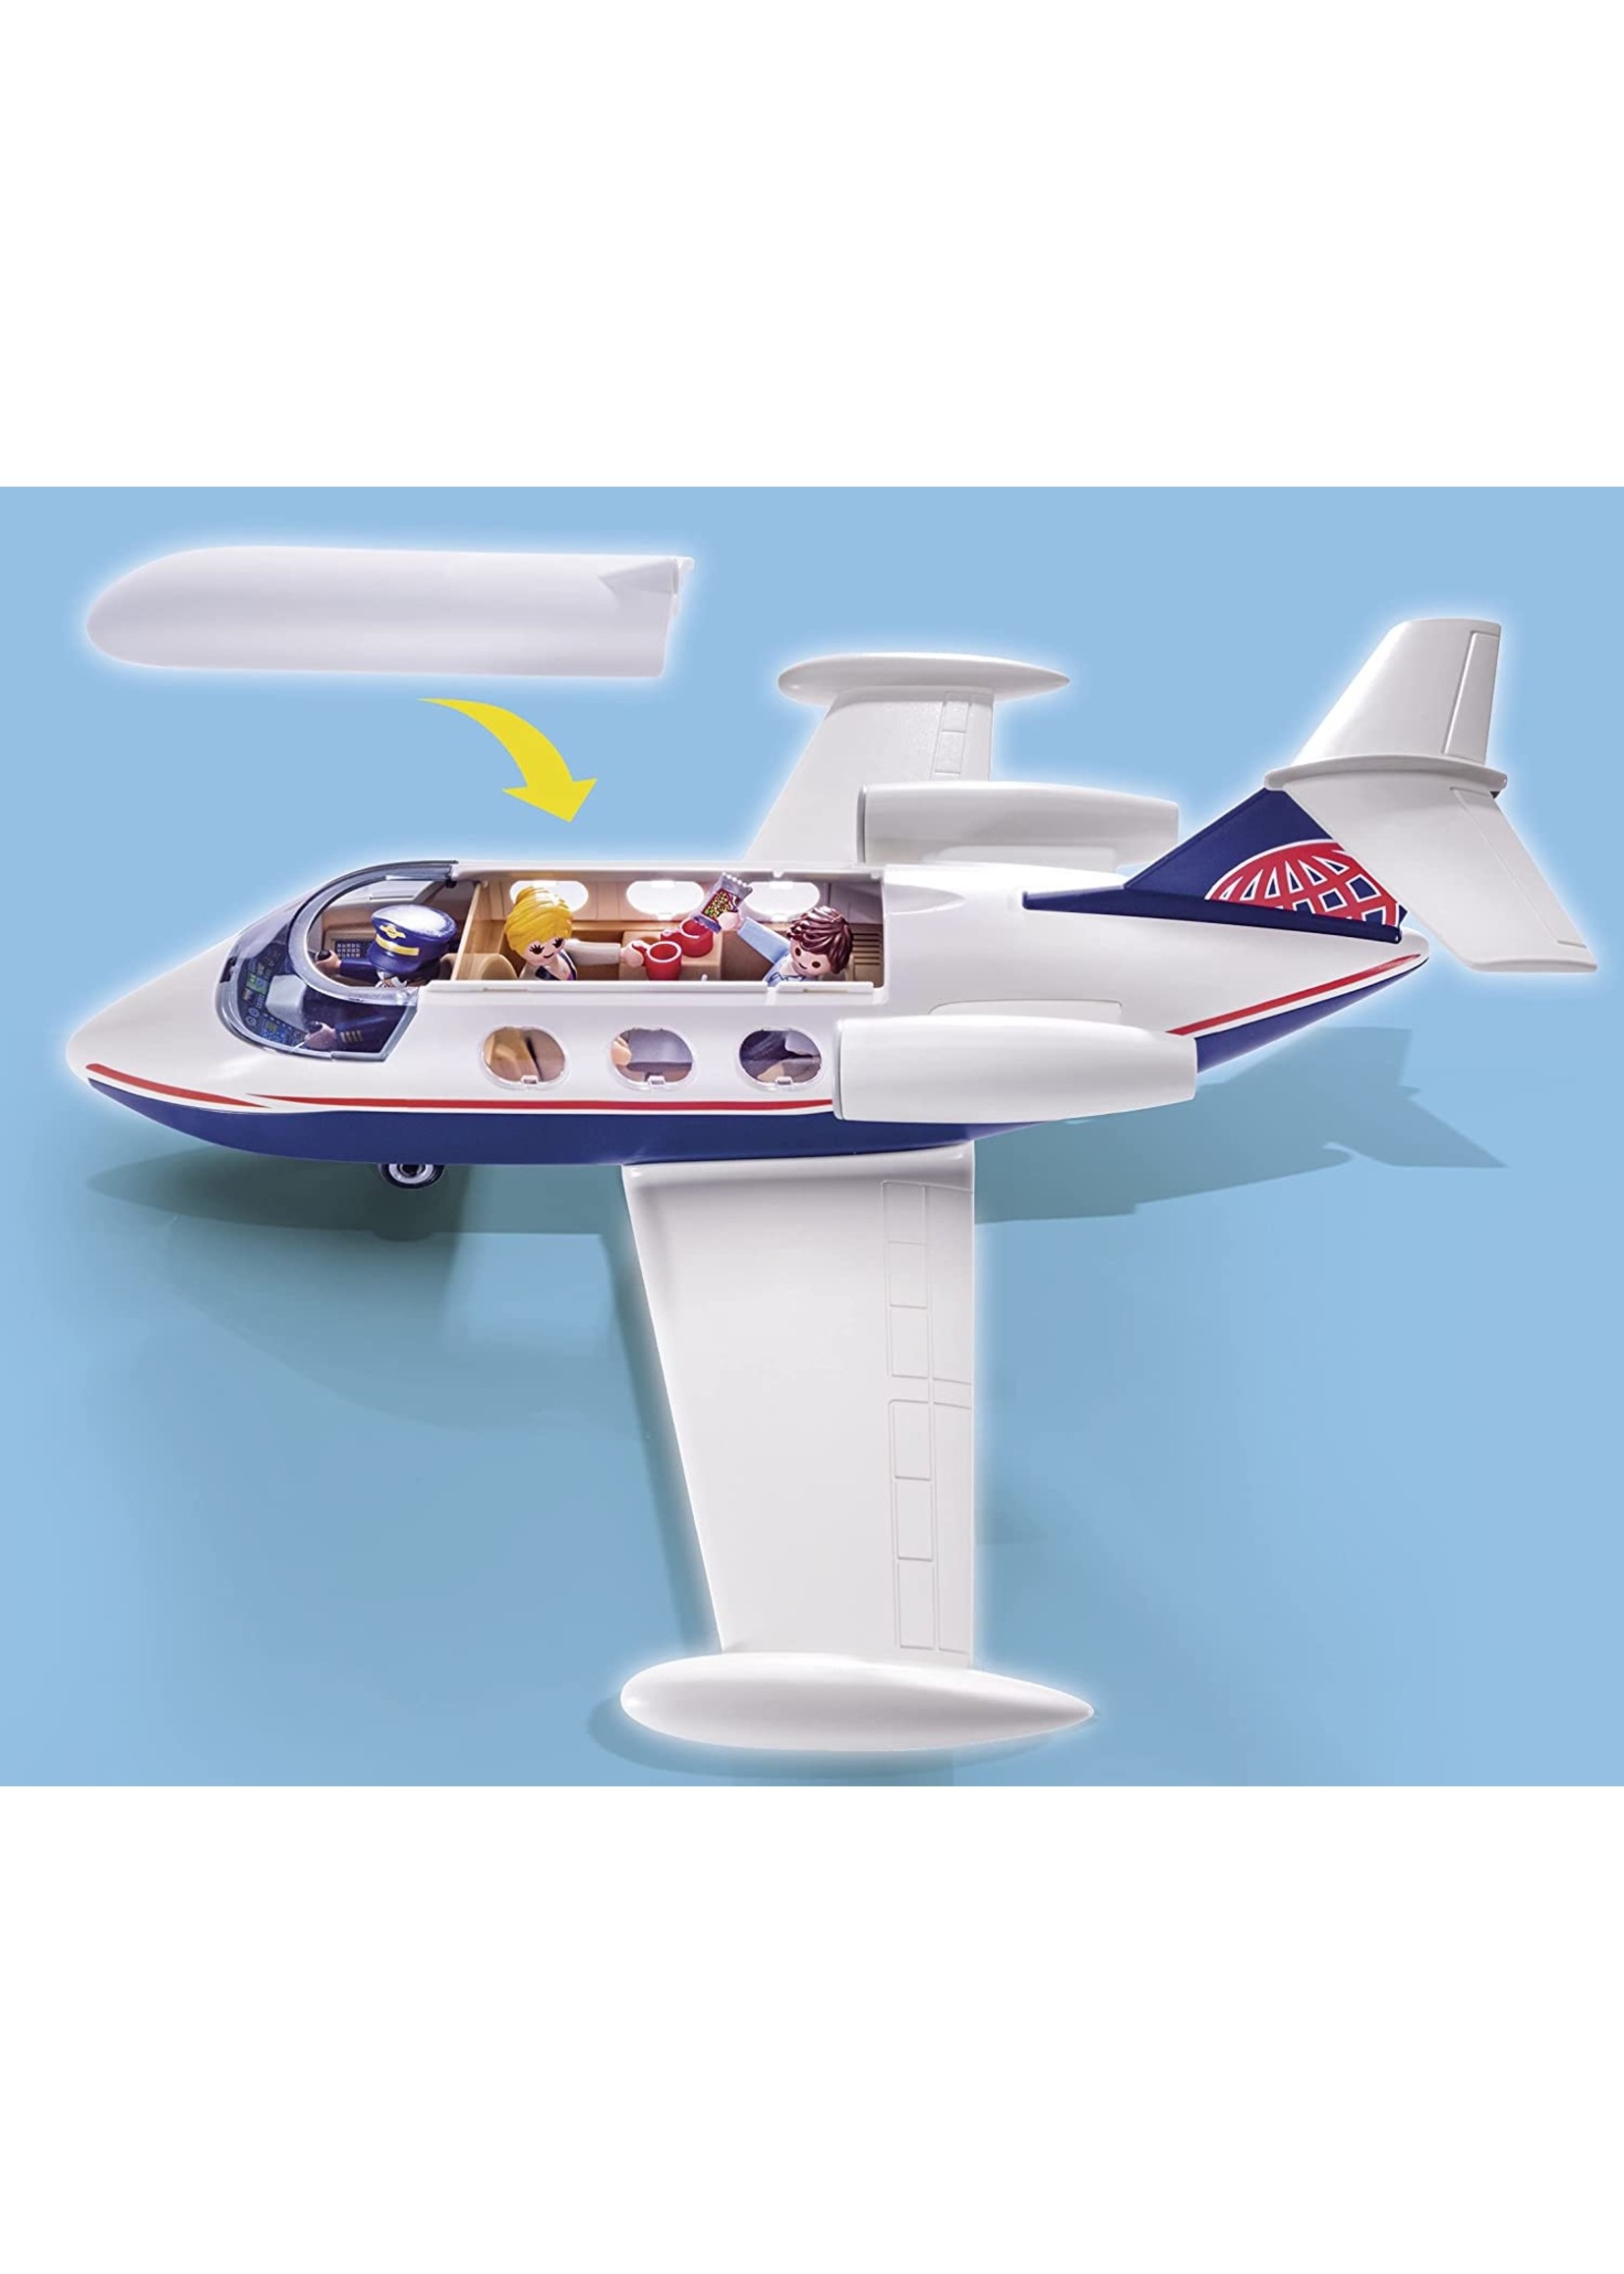 Playmobil 70533 - Private Jet